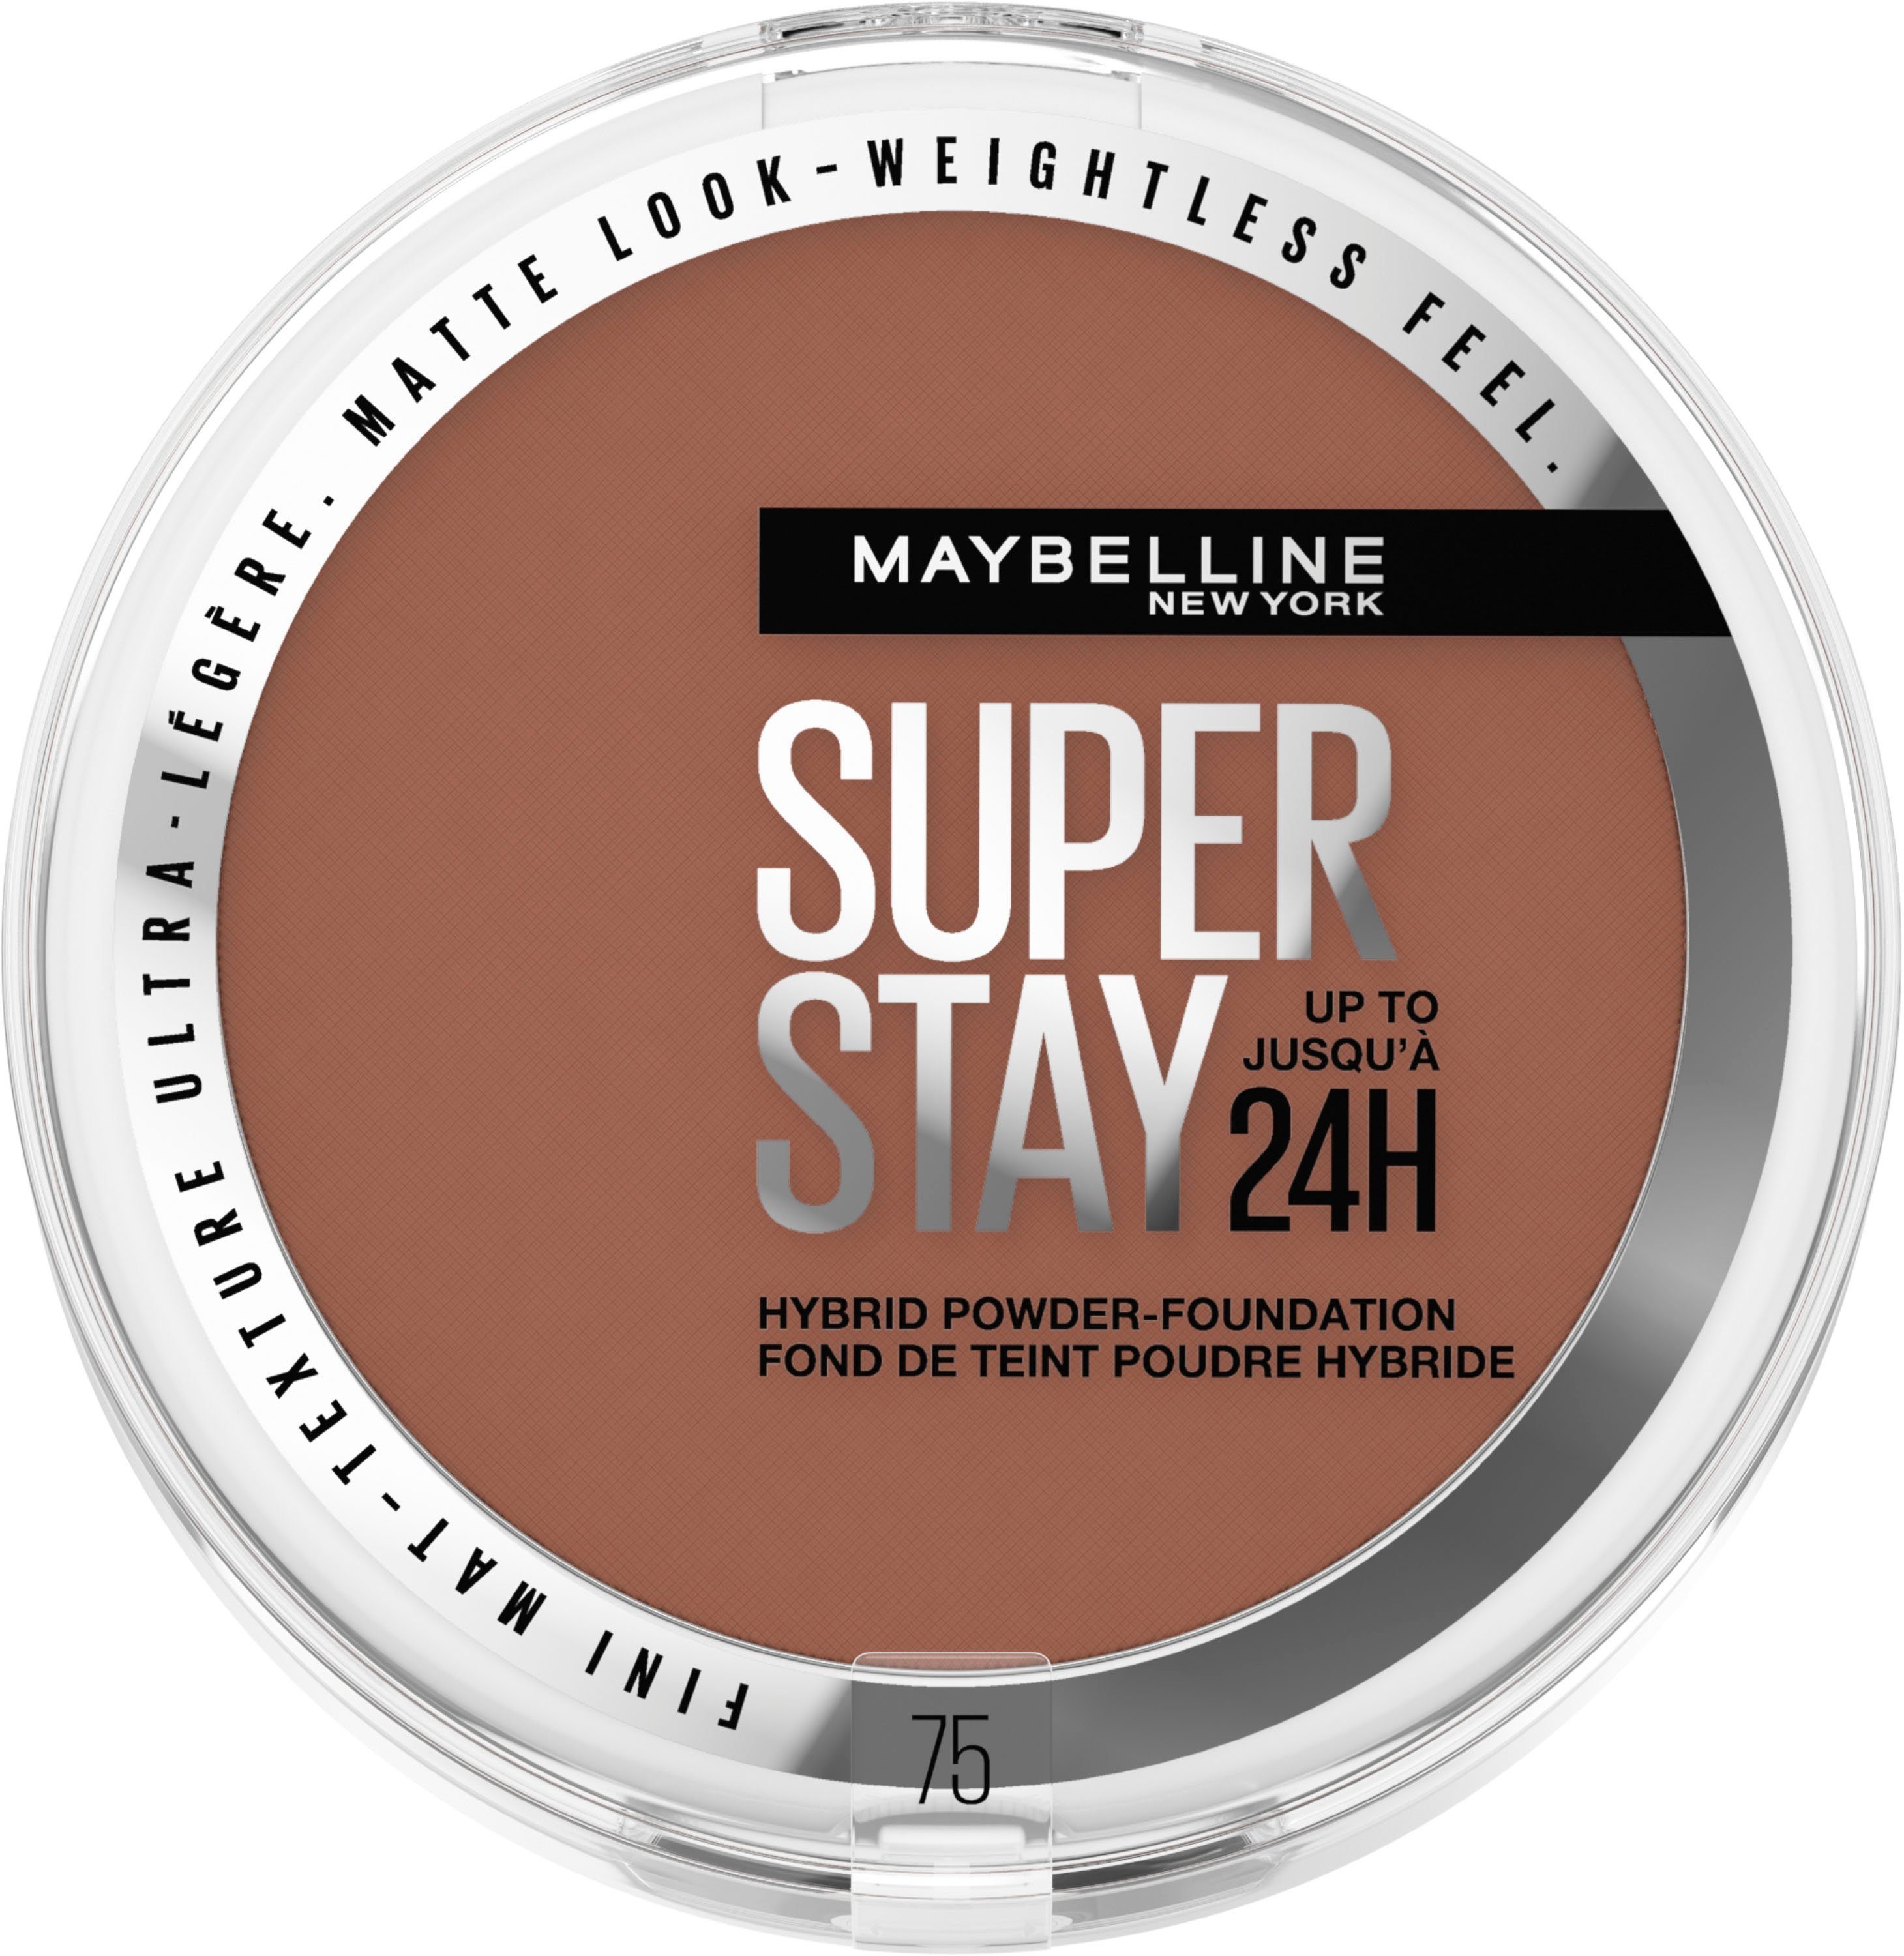 MAYBELLINE NEW YORK New Stay Hybrides Maybelline Make-Up Puder Foundation Super York